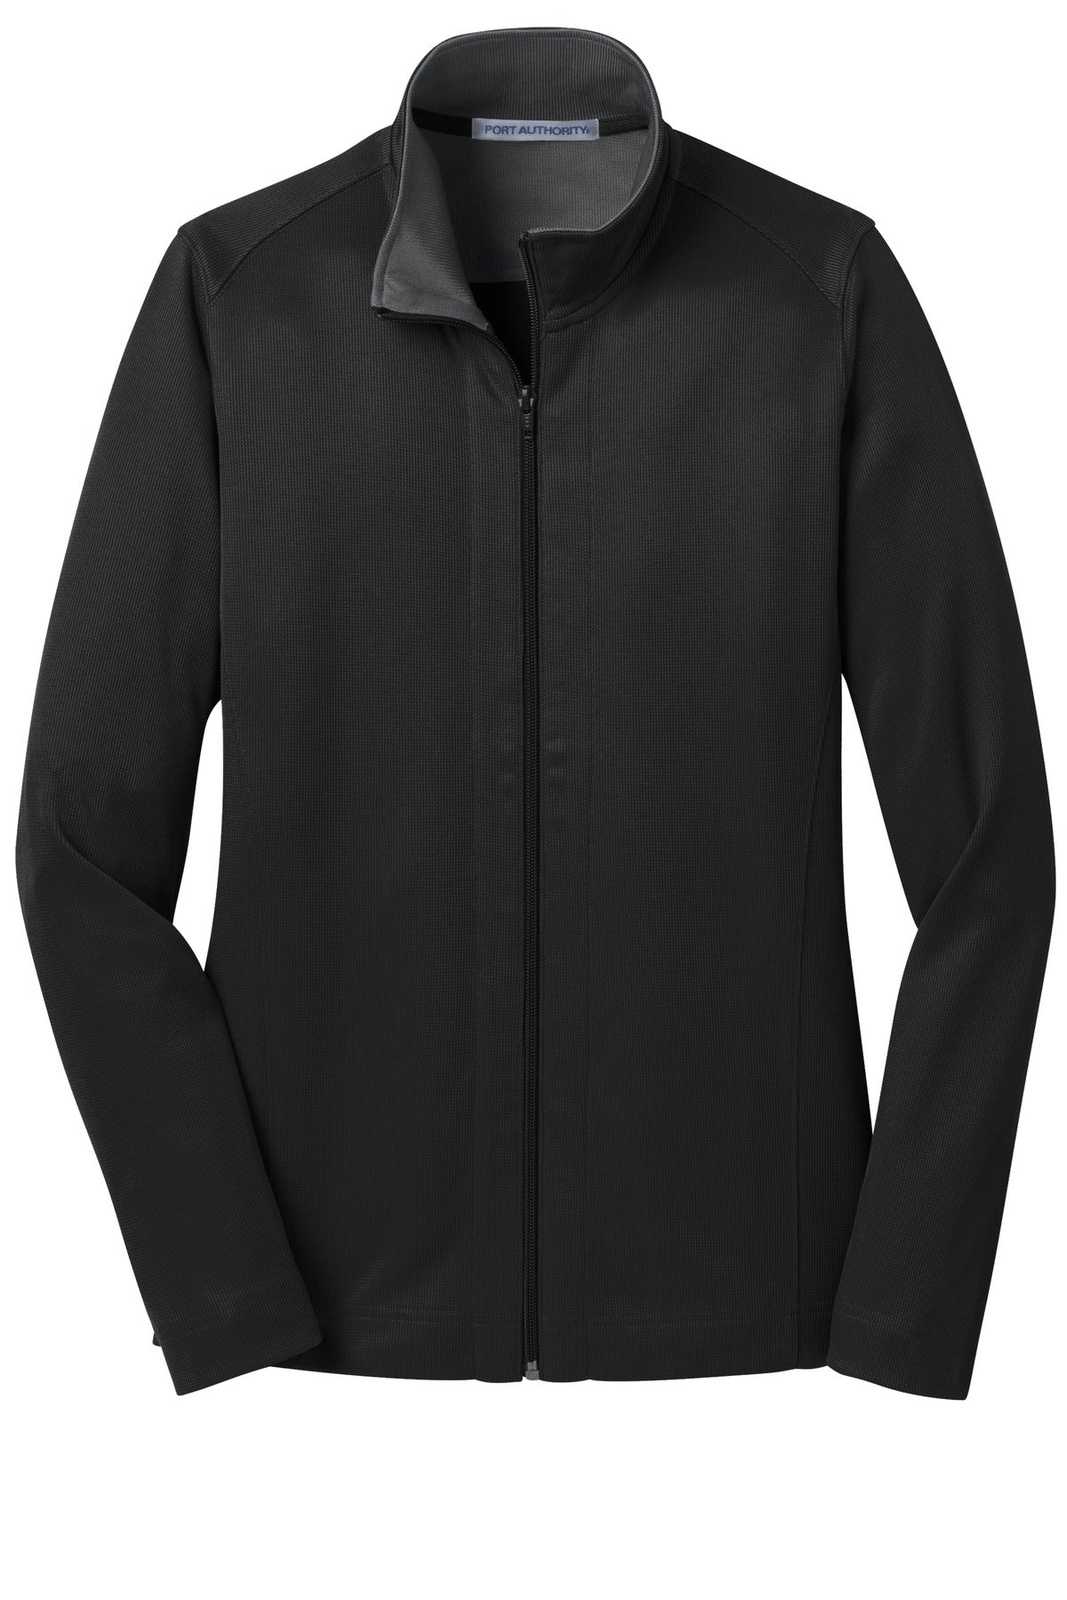 Port Authority L805 Ladies Vertical Texture Full-Zip Jacket - Black Iron Gray - HIT a Double - 5